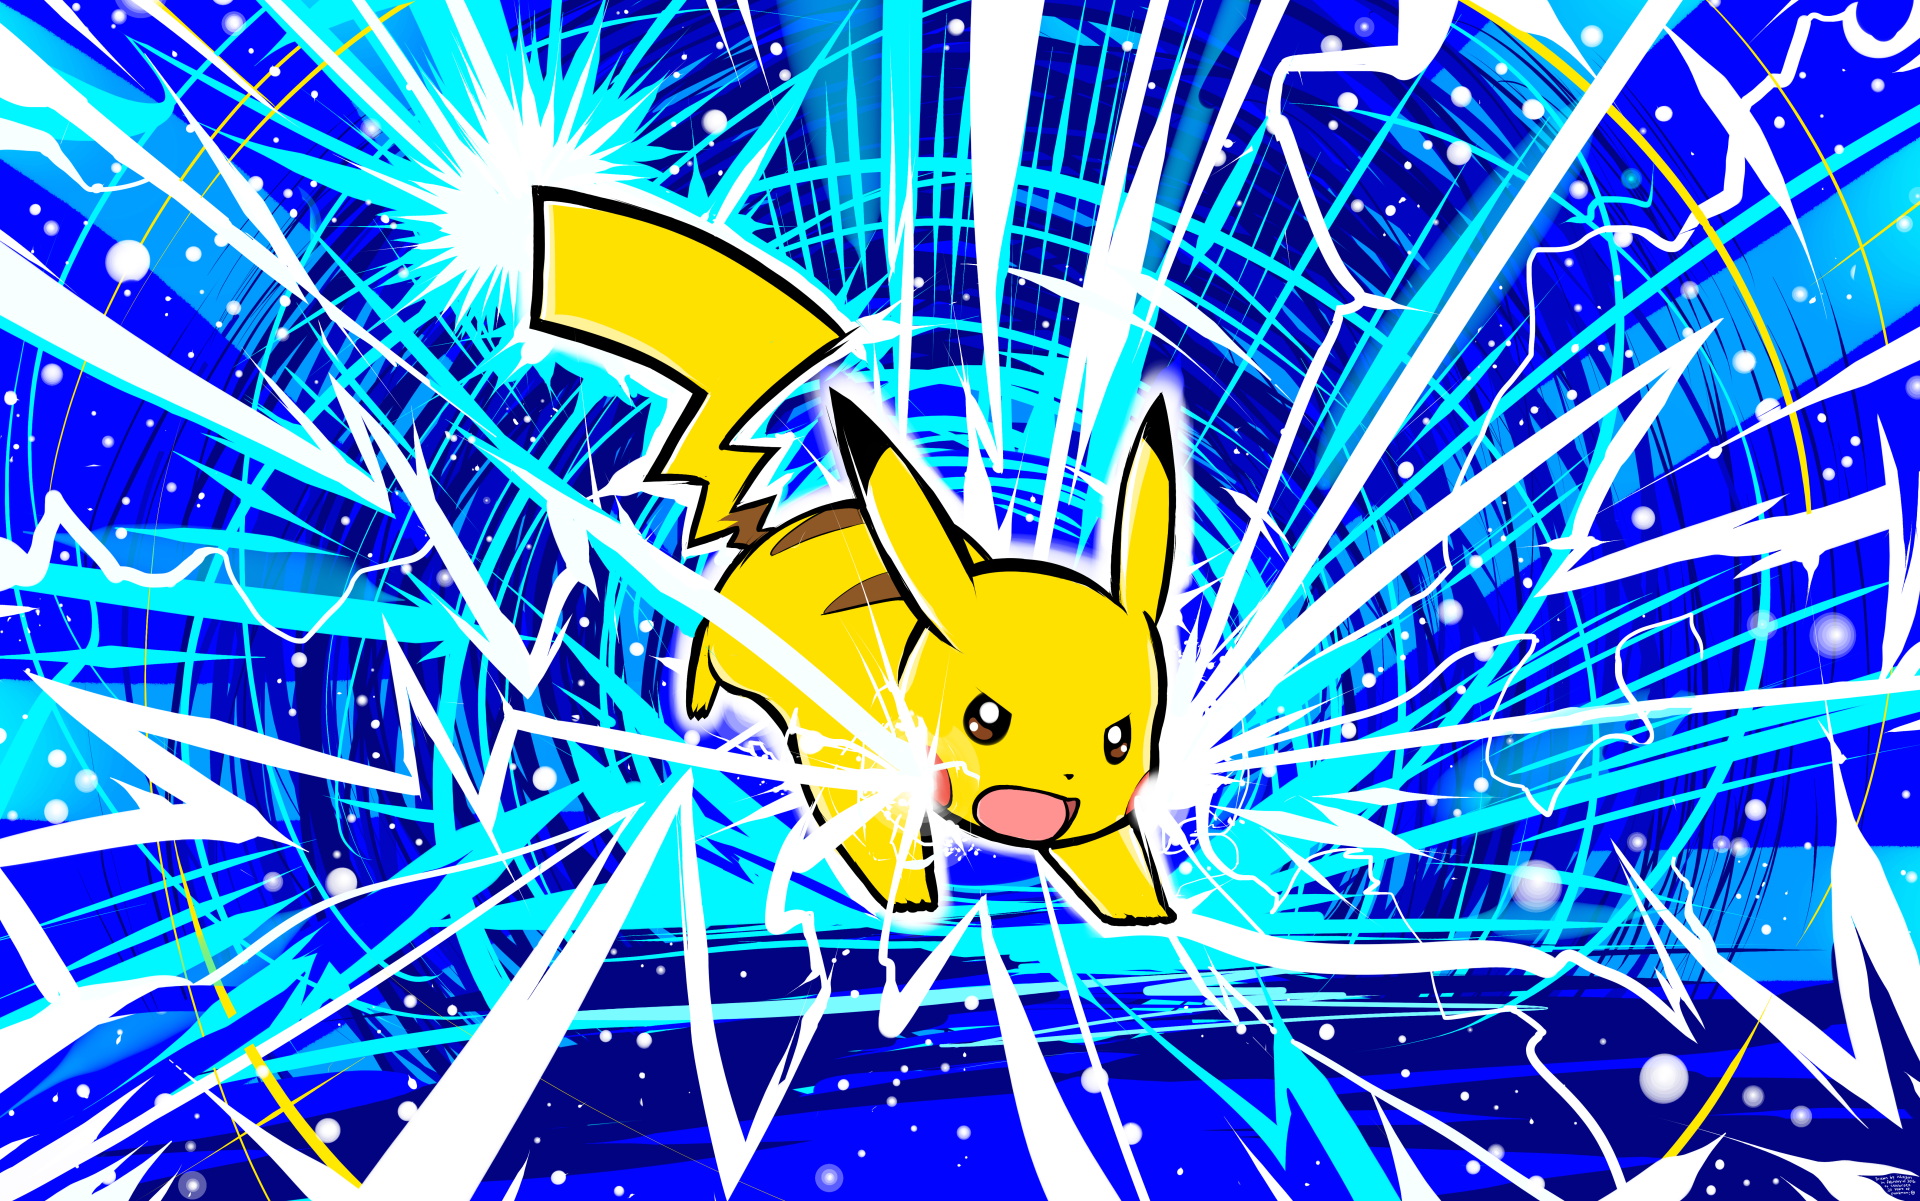 7100x4440 Pikachu | Thunderbolt by ishmam Wallpaper Background Image. 